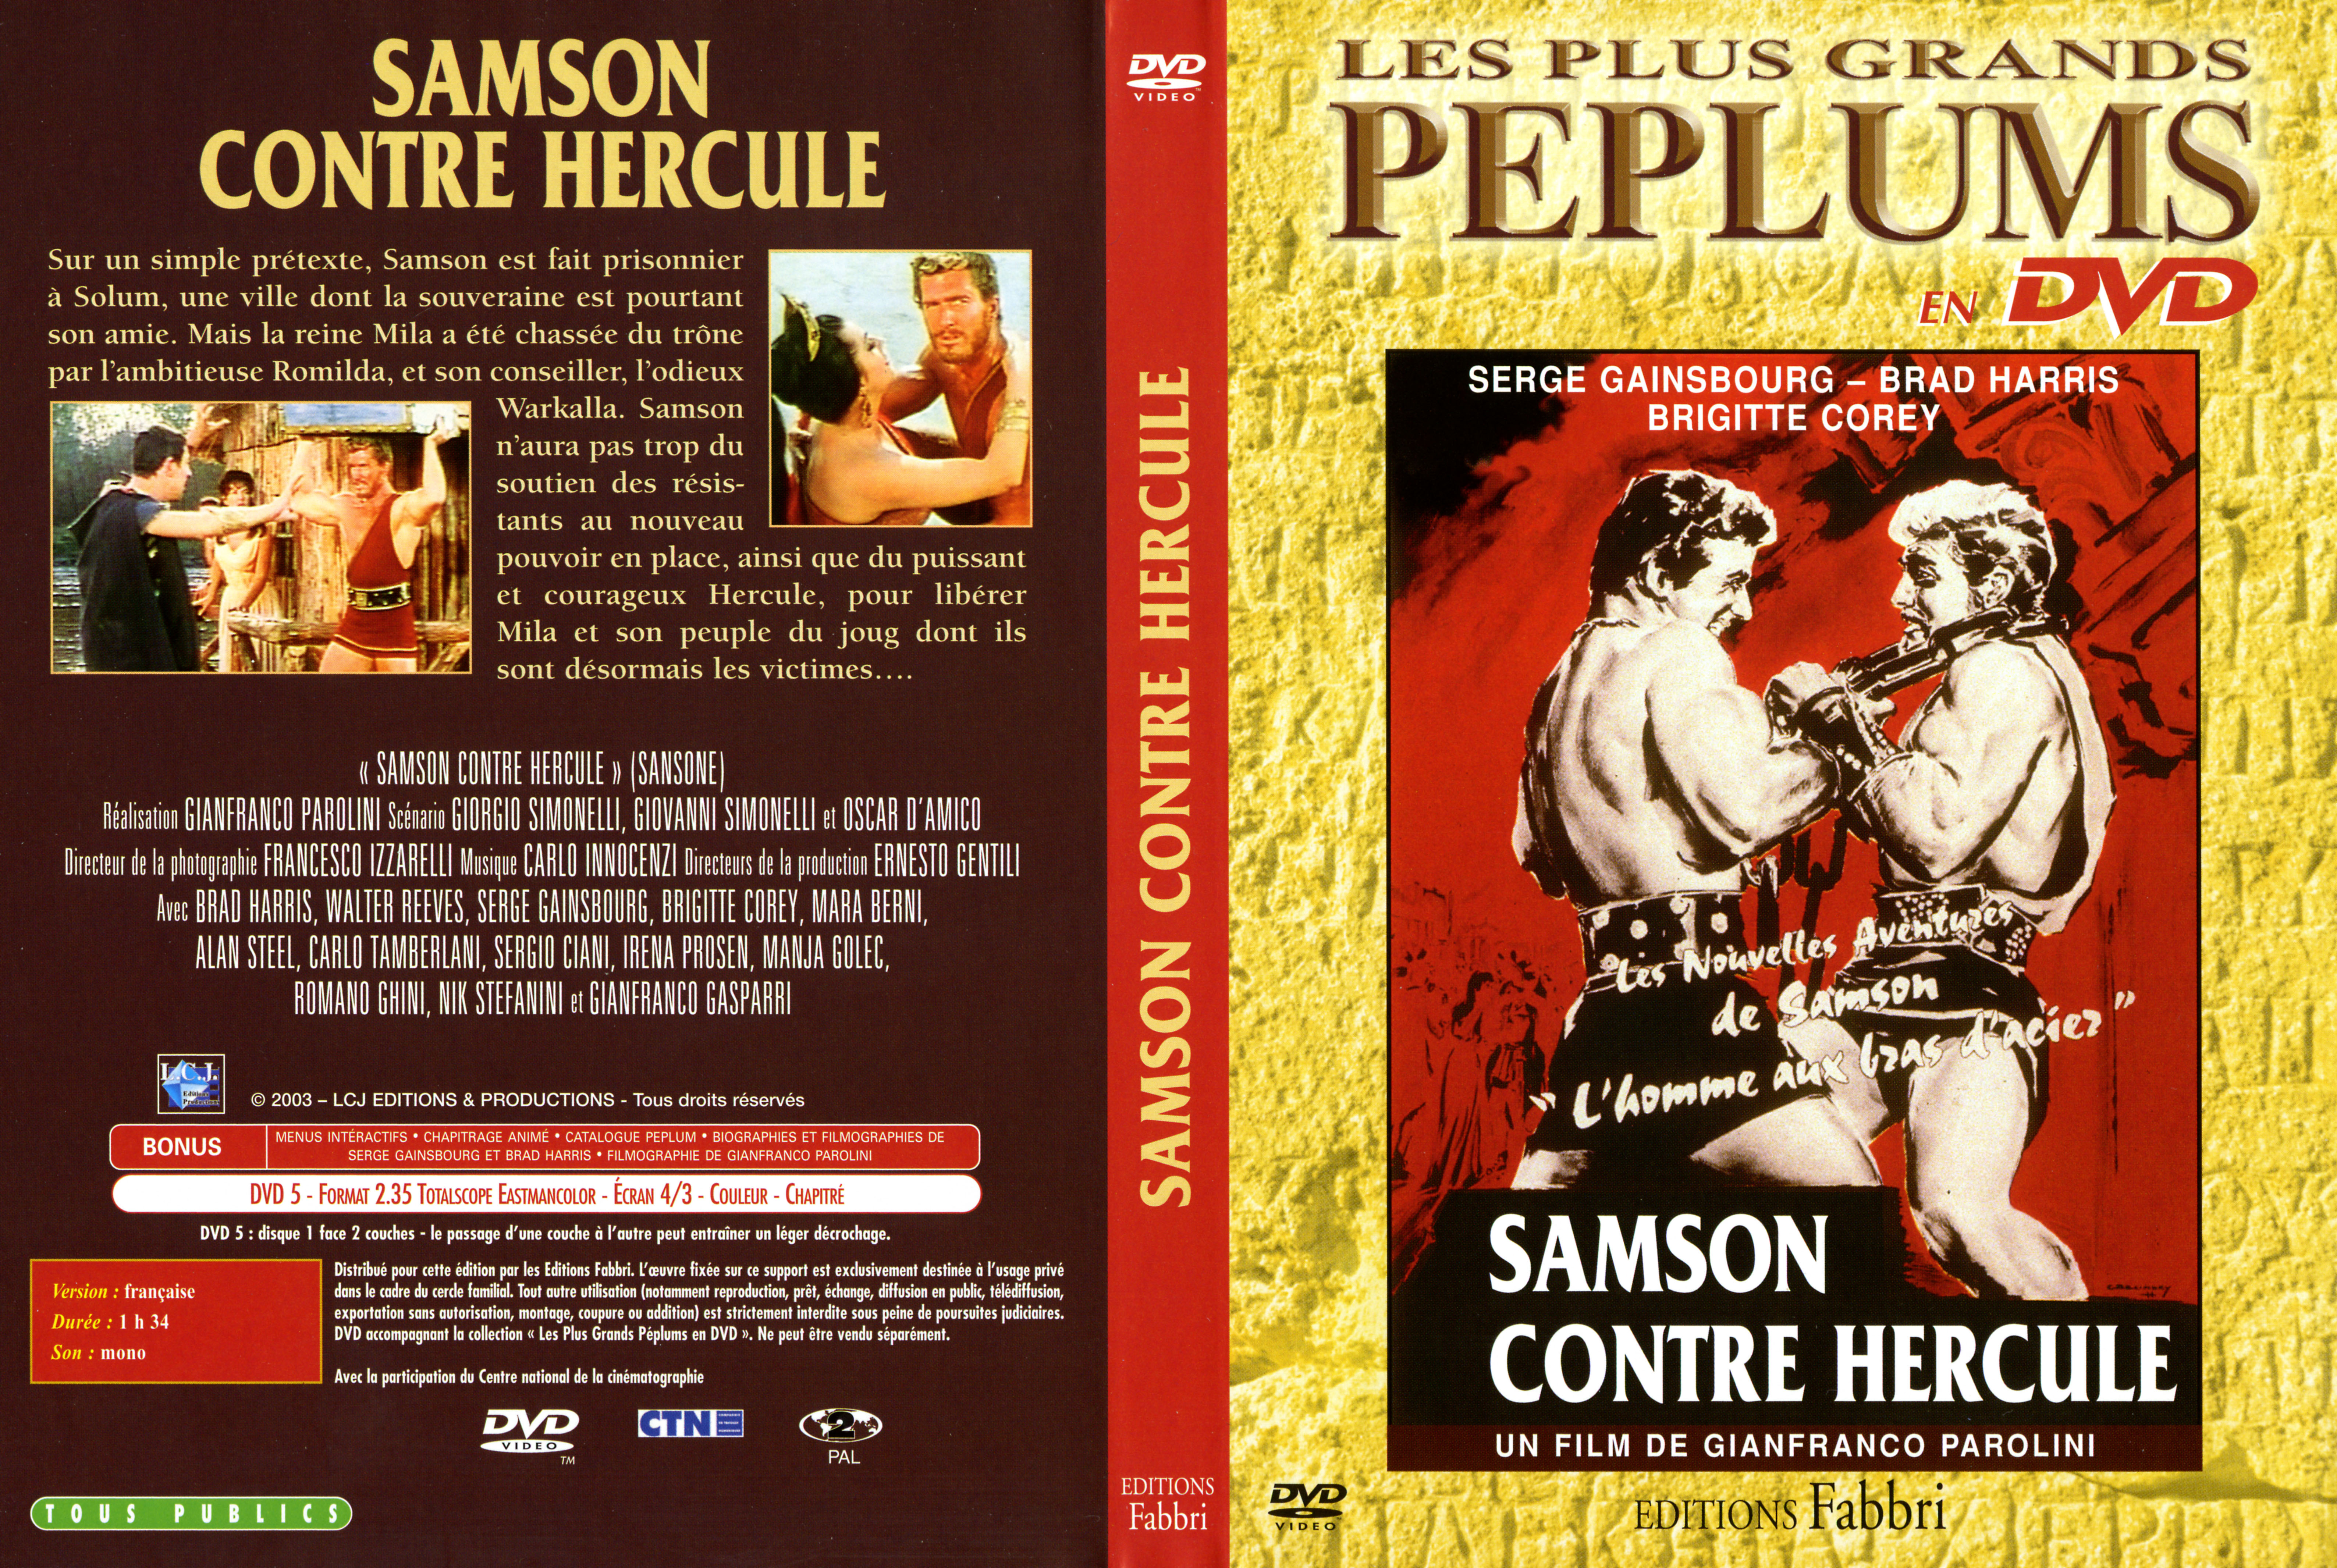 Jaquette DVD Samson contre Hercule v2